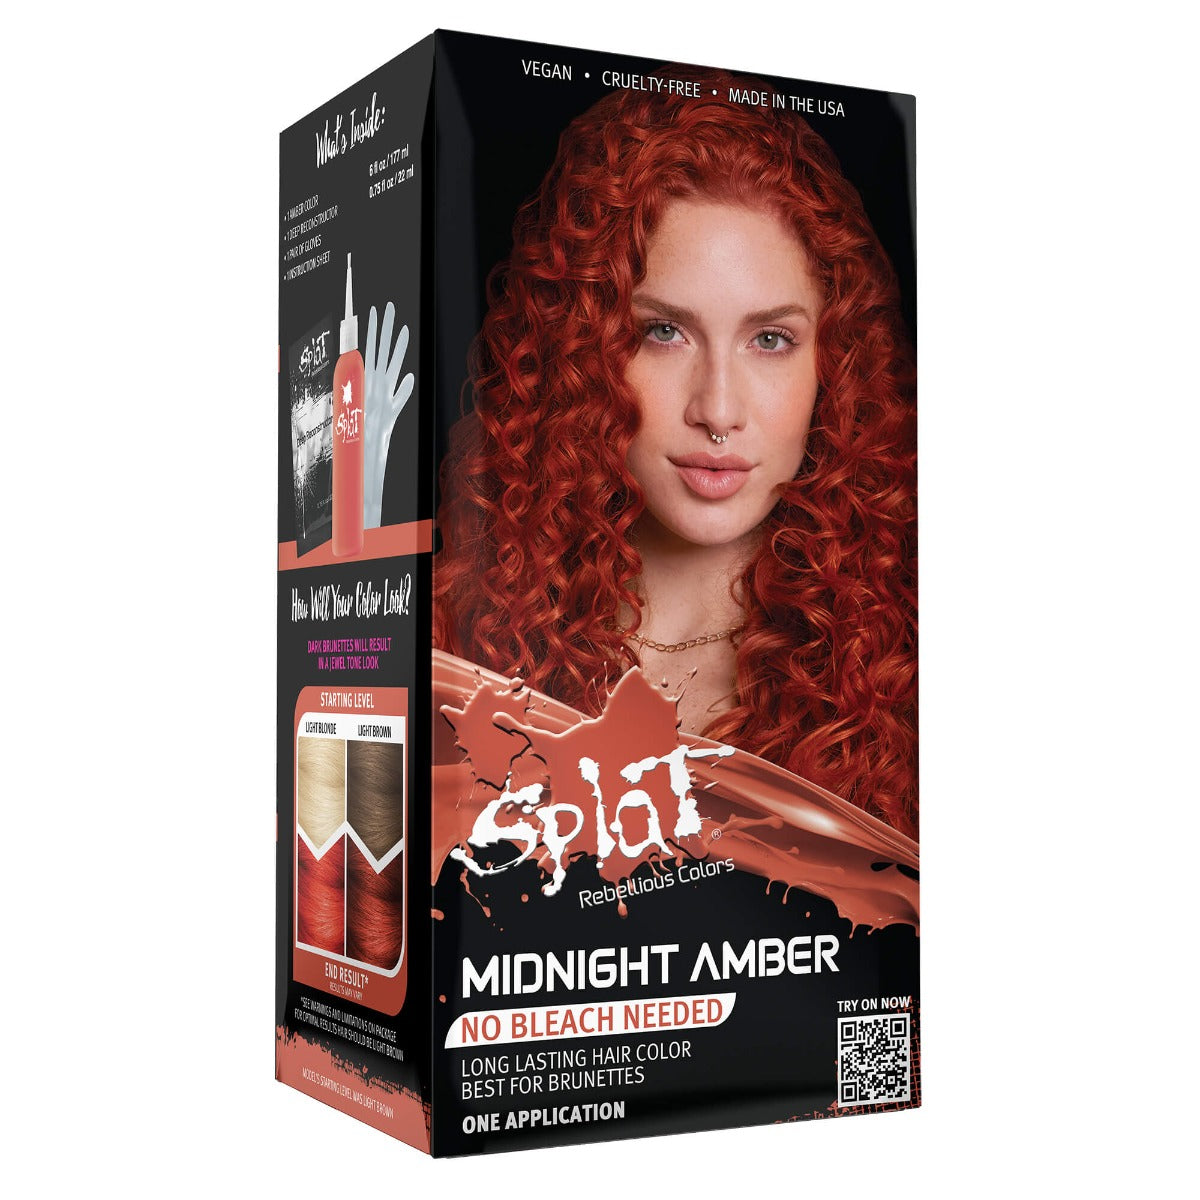 A box of Splat Hair Color&#39;s Midnigh Amber Hair Dye